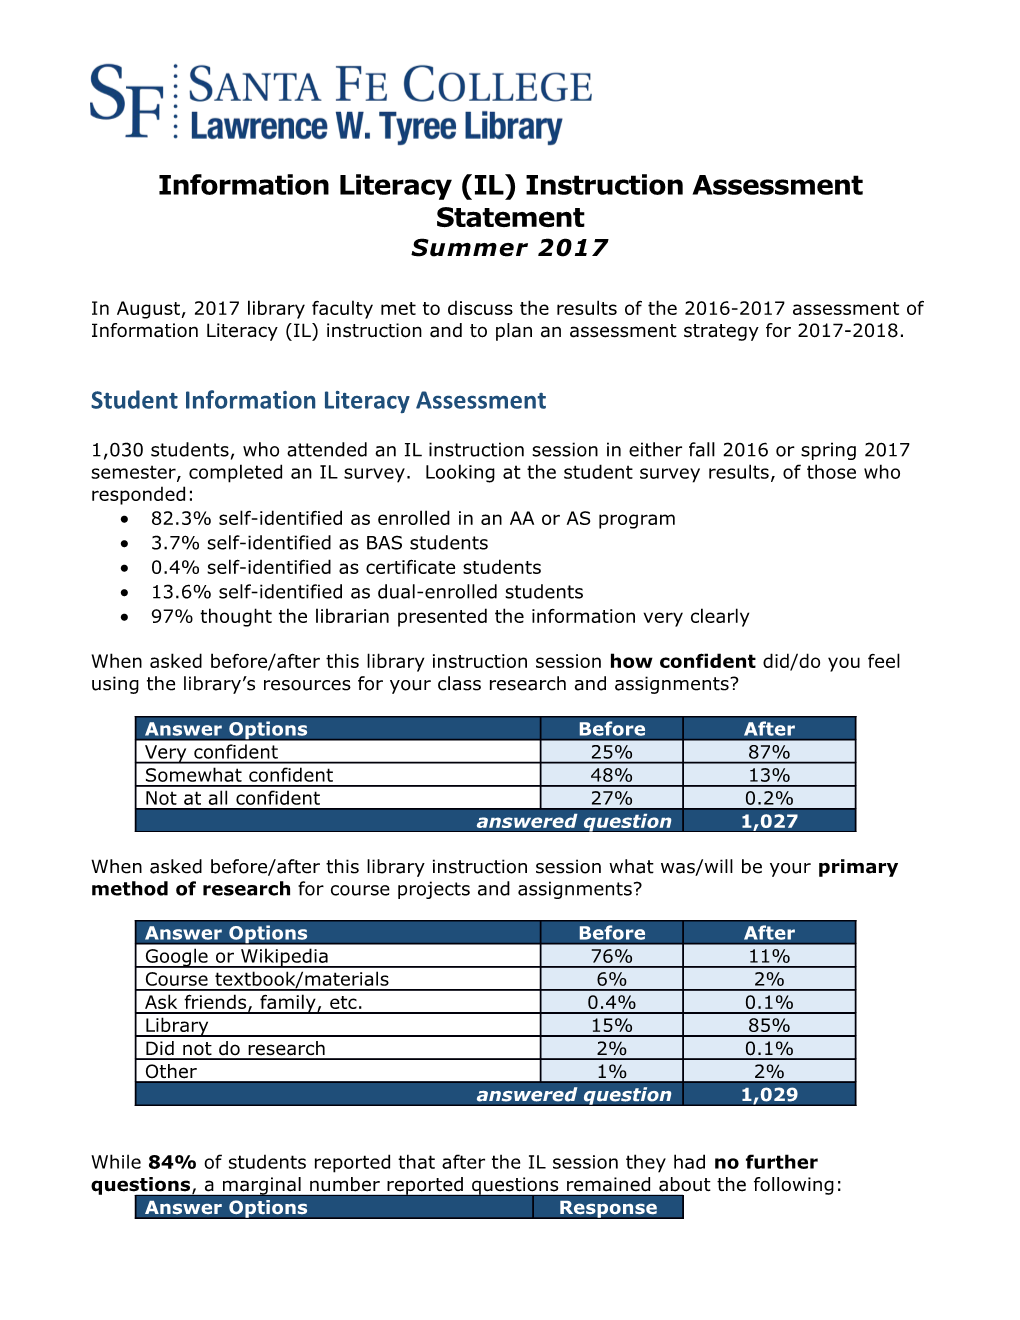 Information Literacy (IL) Instruction Assessment Statement